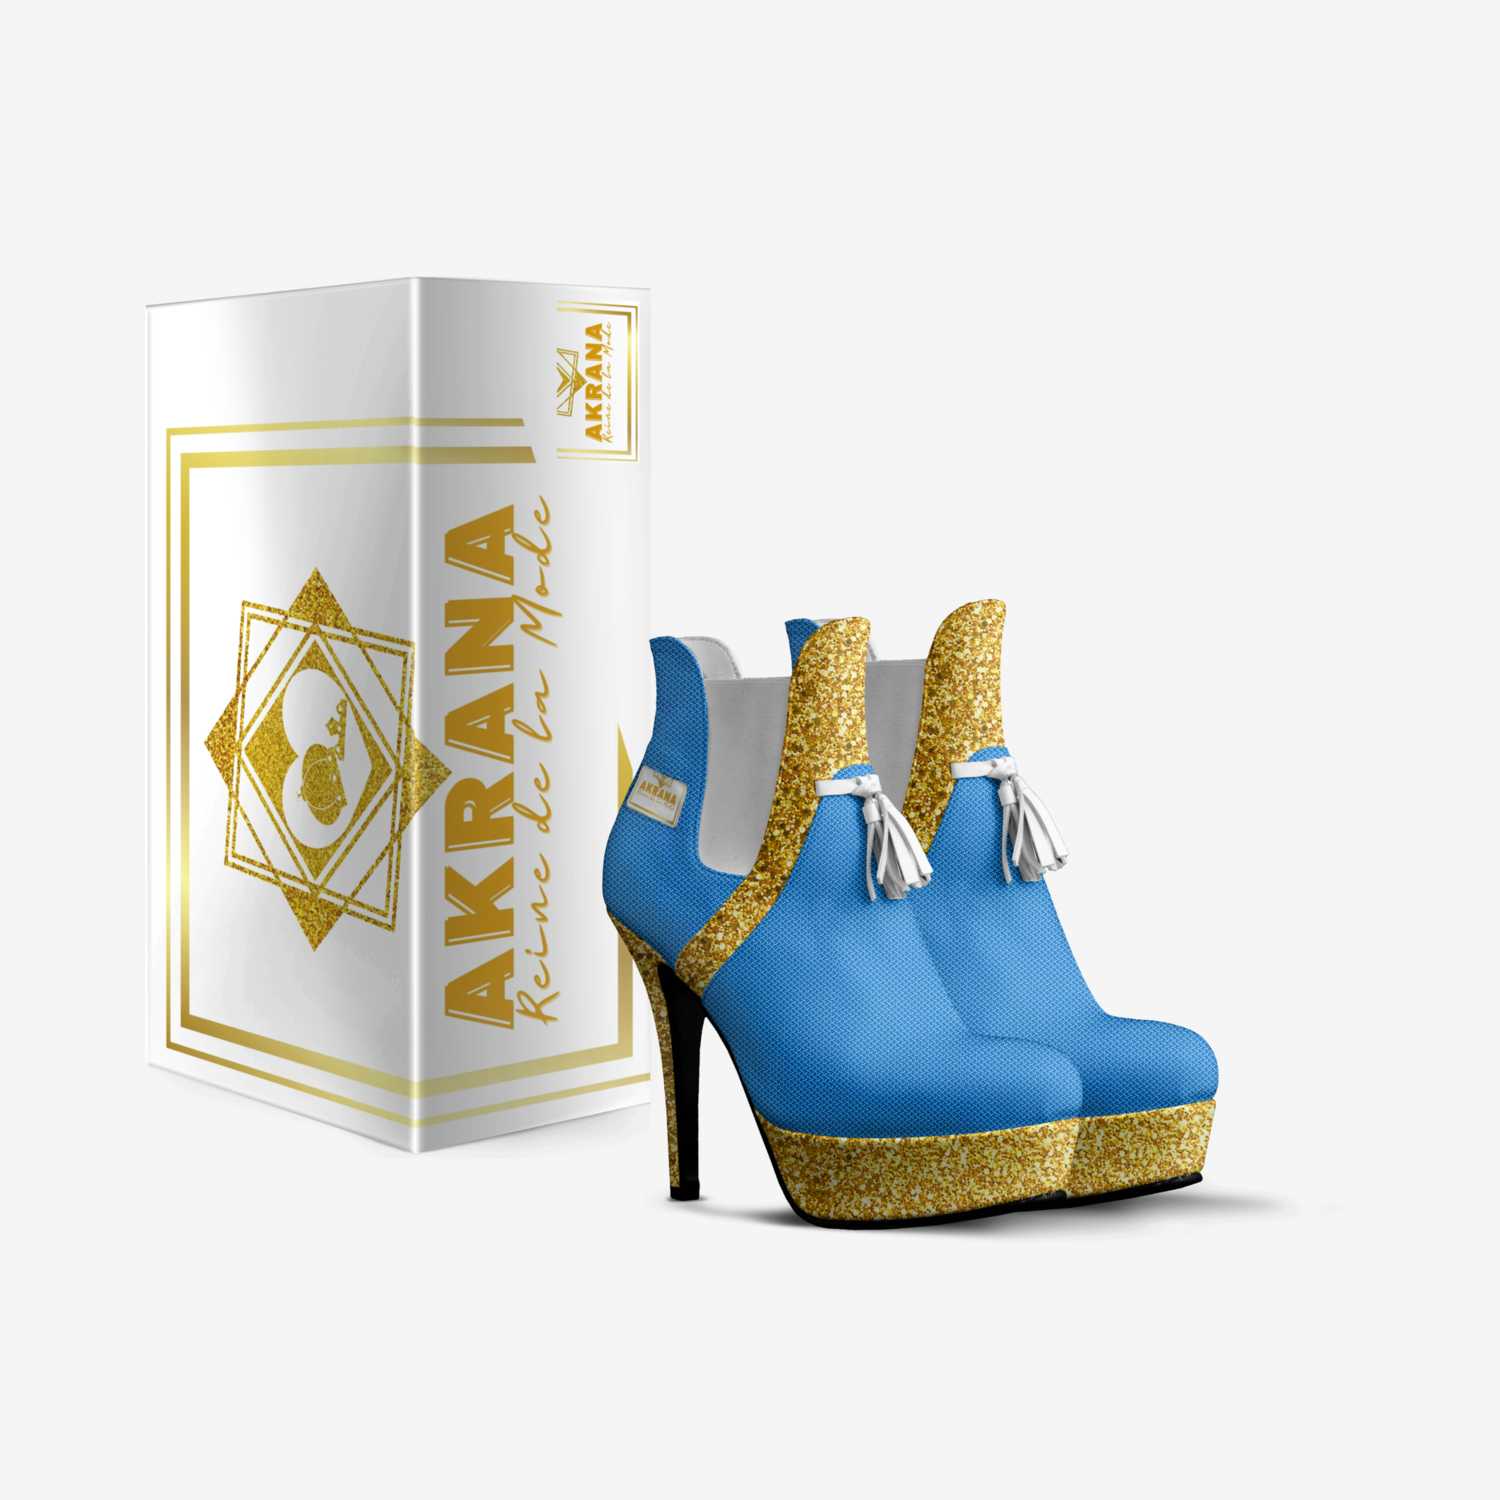 Dahabu custom made in Italy shoes by Abdulkhadir Mwanambaji | Box view